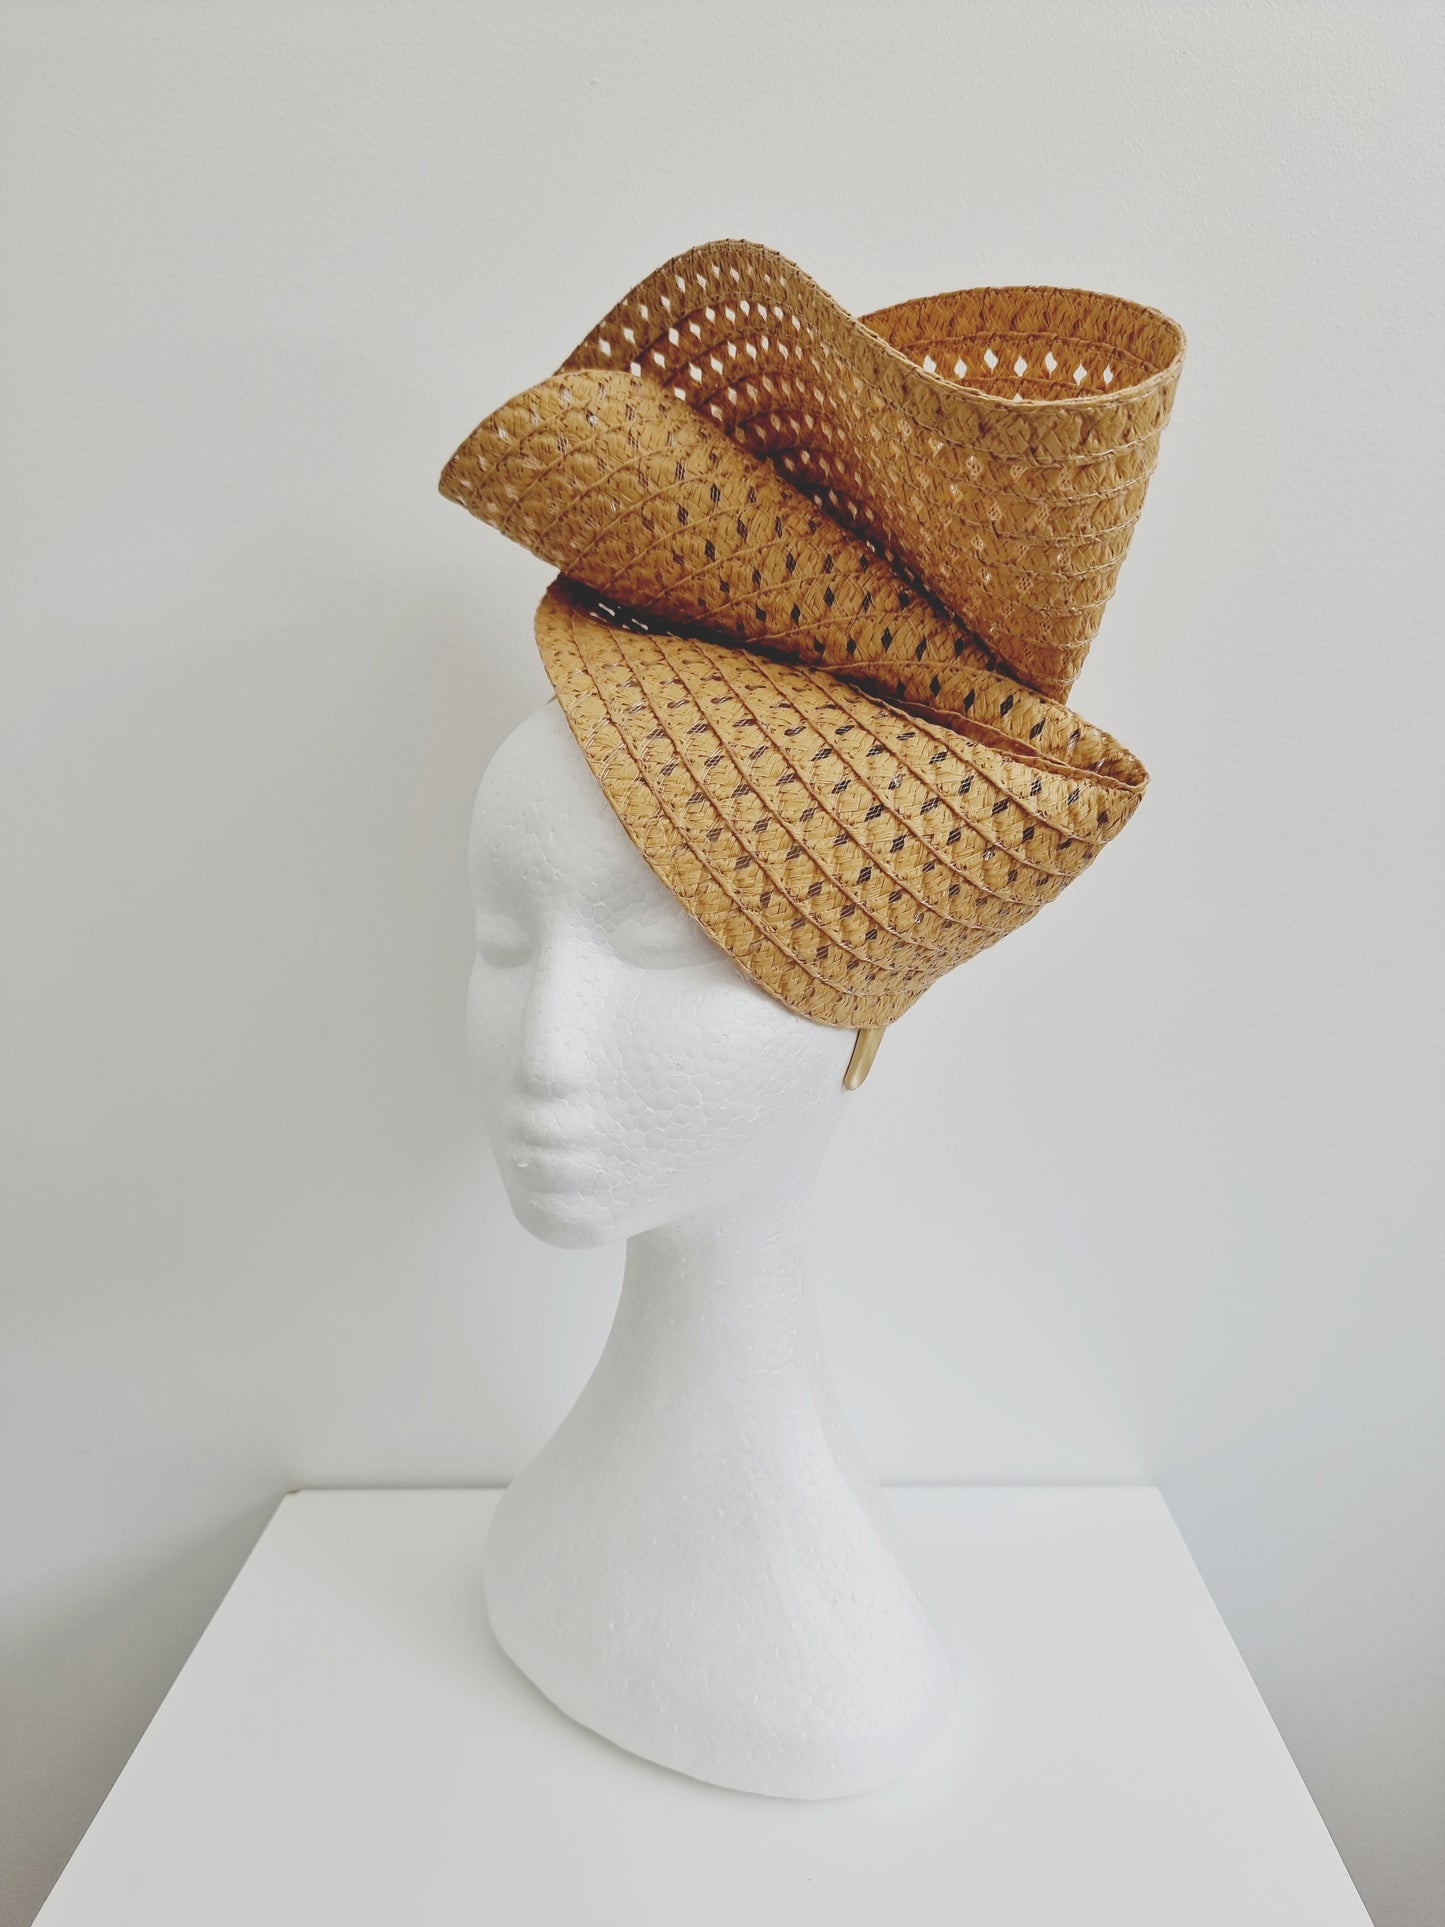 Miss Tara. Womens braided headband fascinator in Caramel